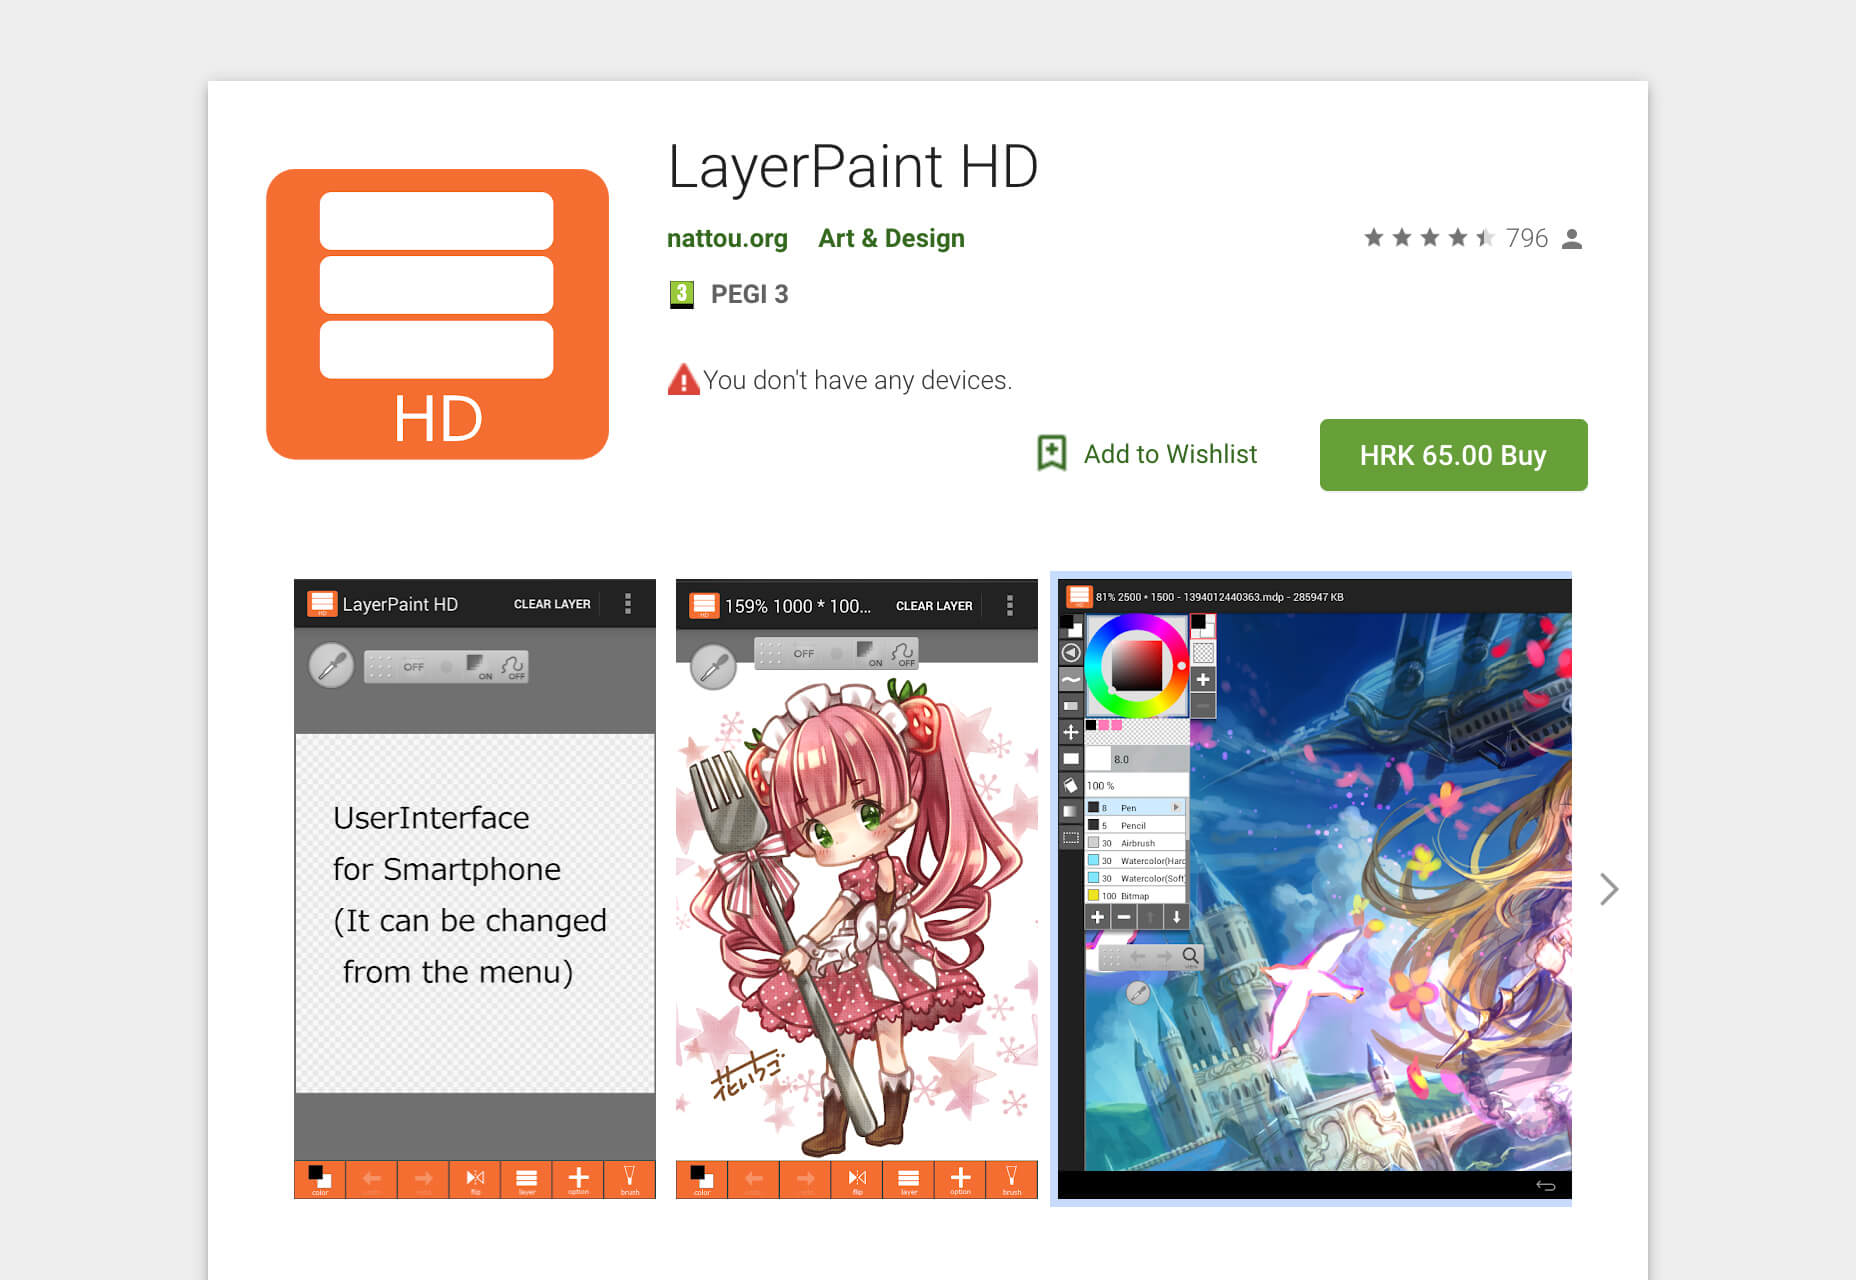 LayerPaint HD